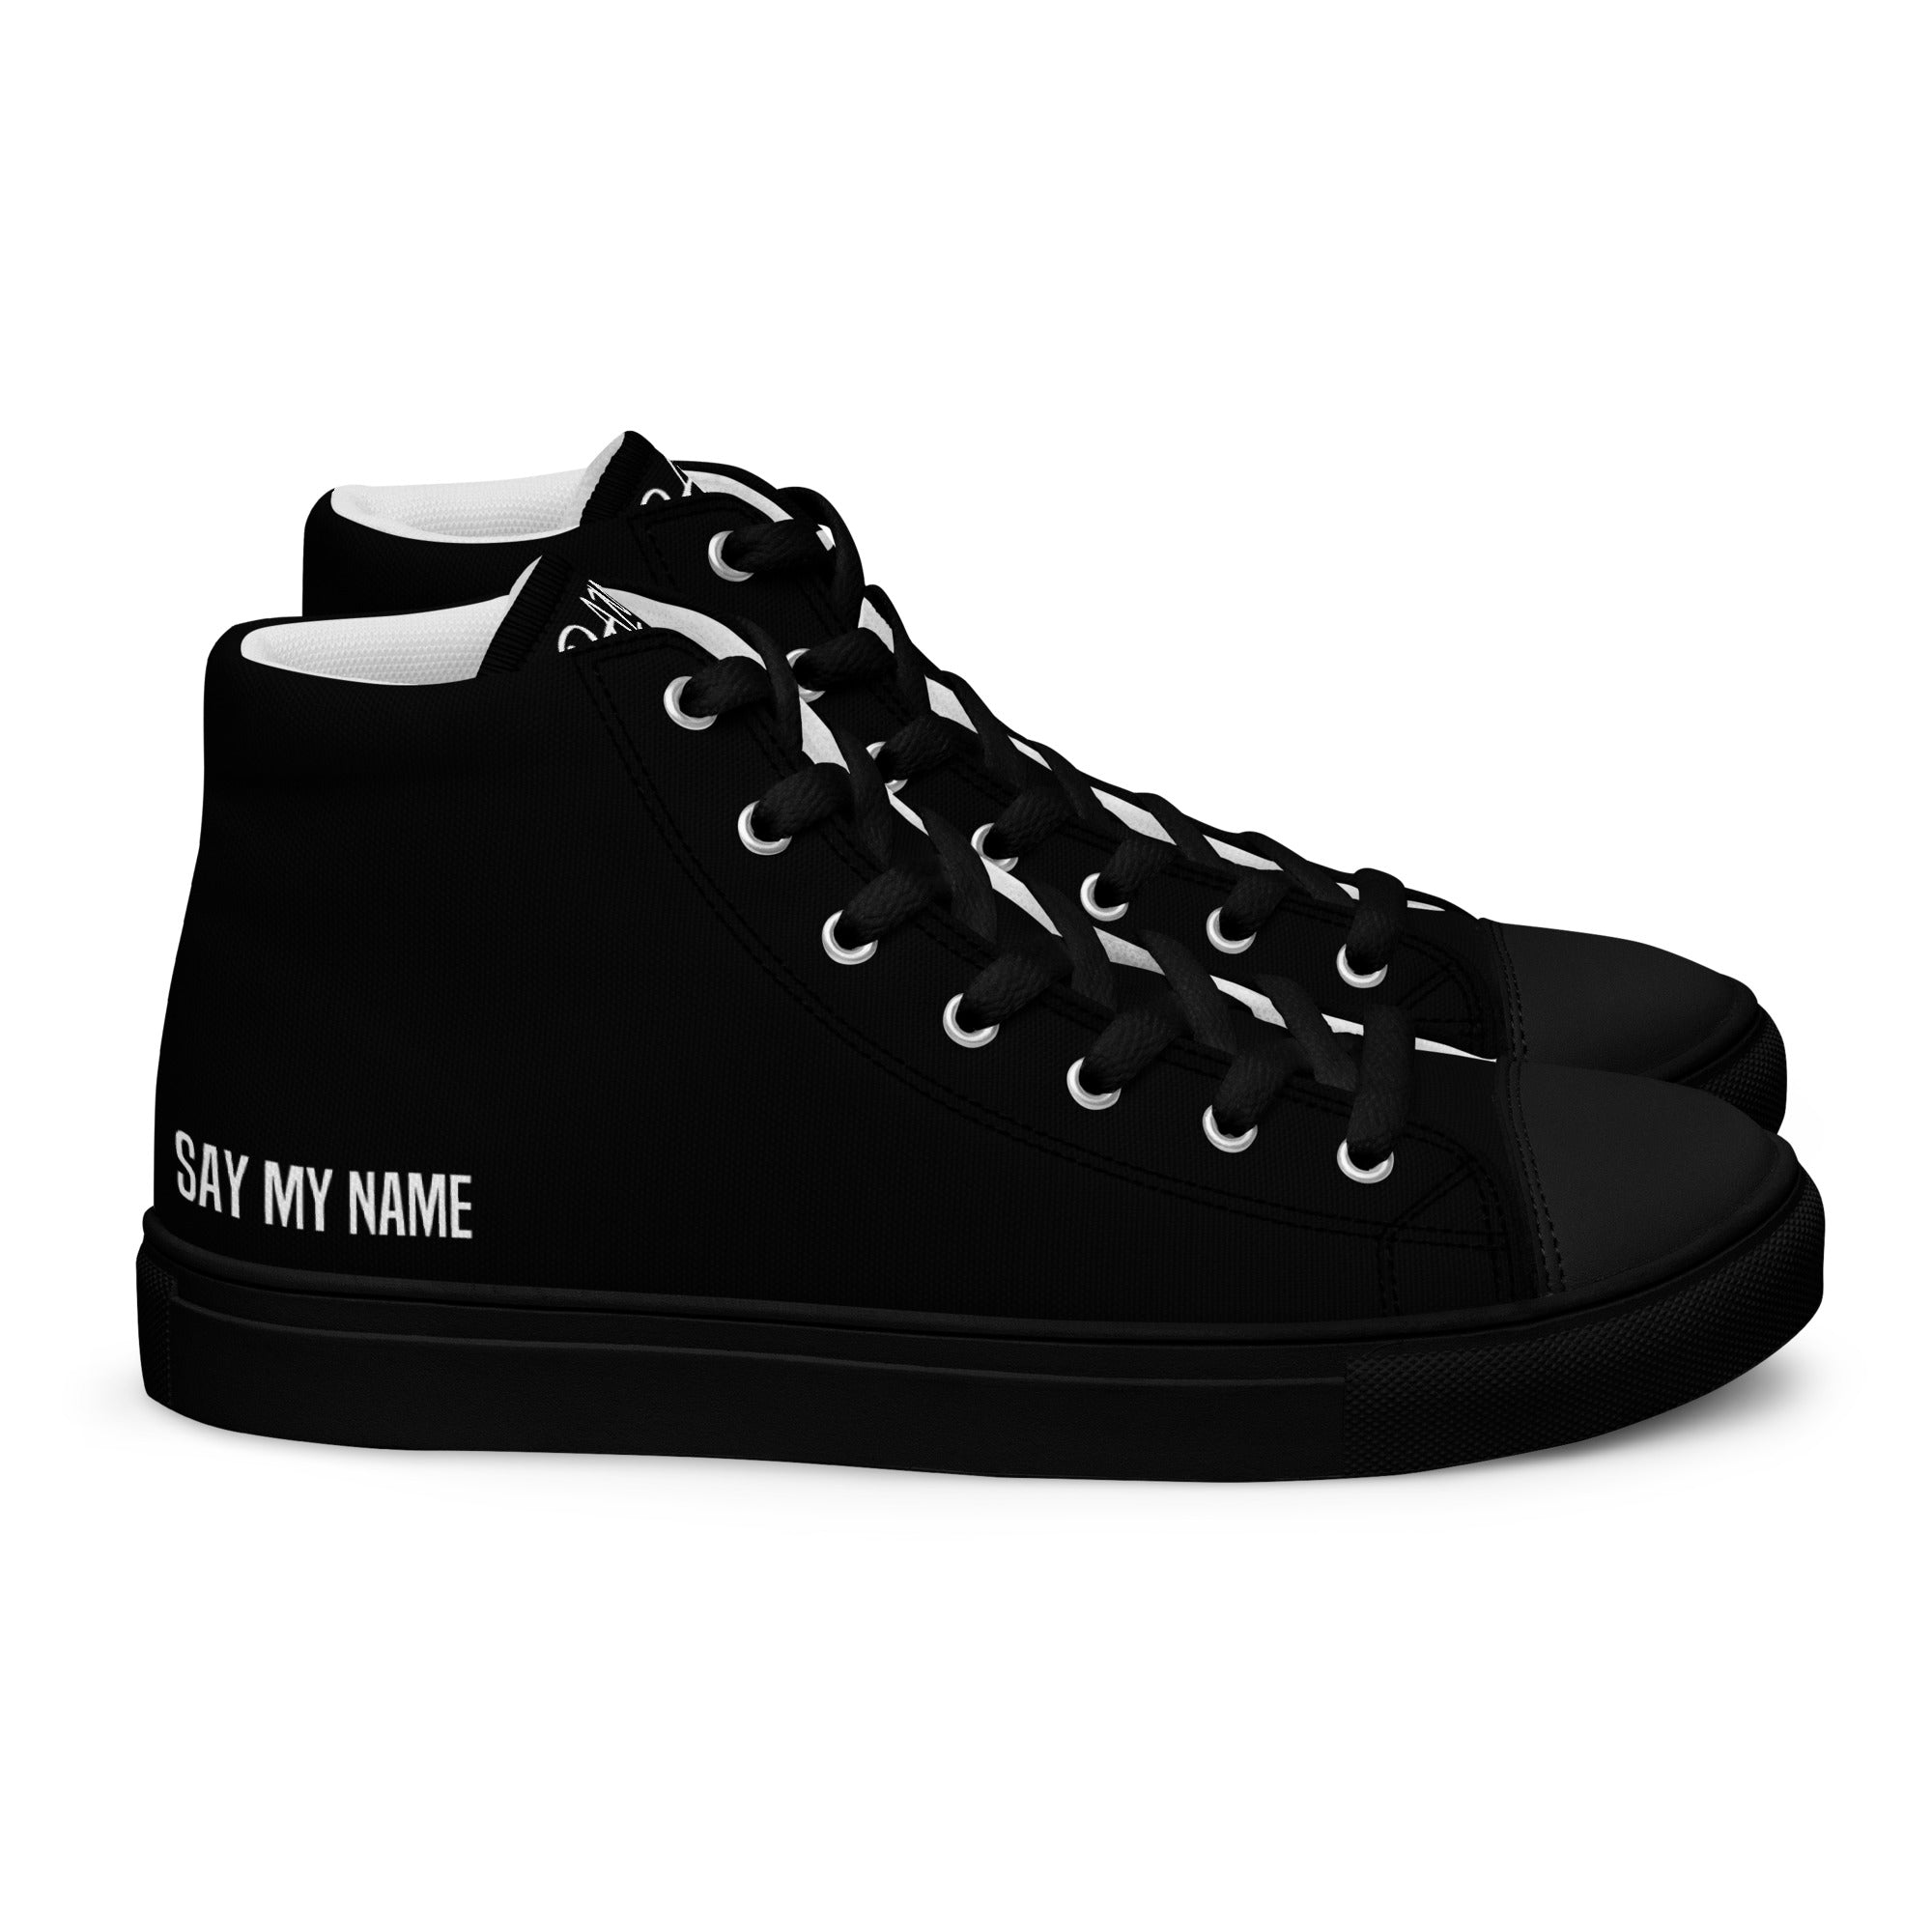 BLACK BLACK "SAY MY NAME" men's high canvas sneakers